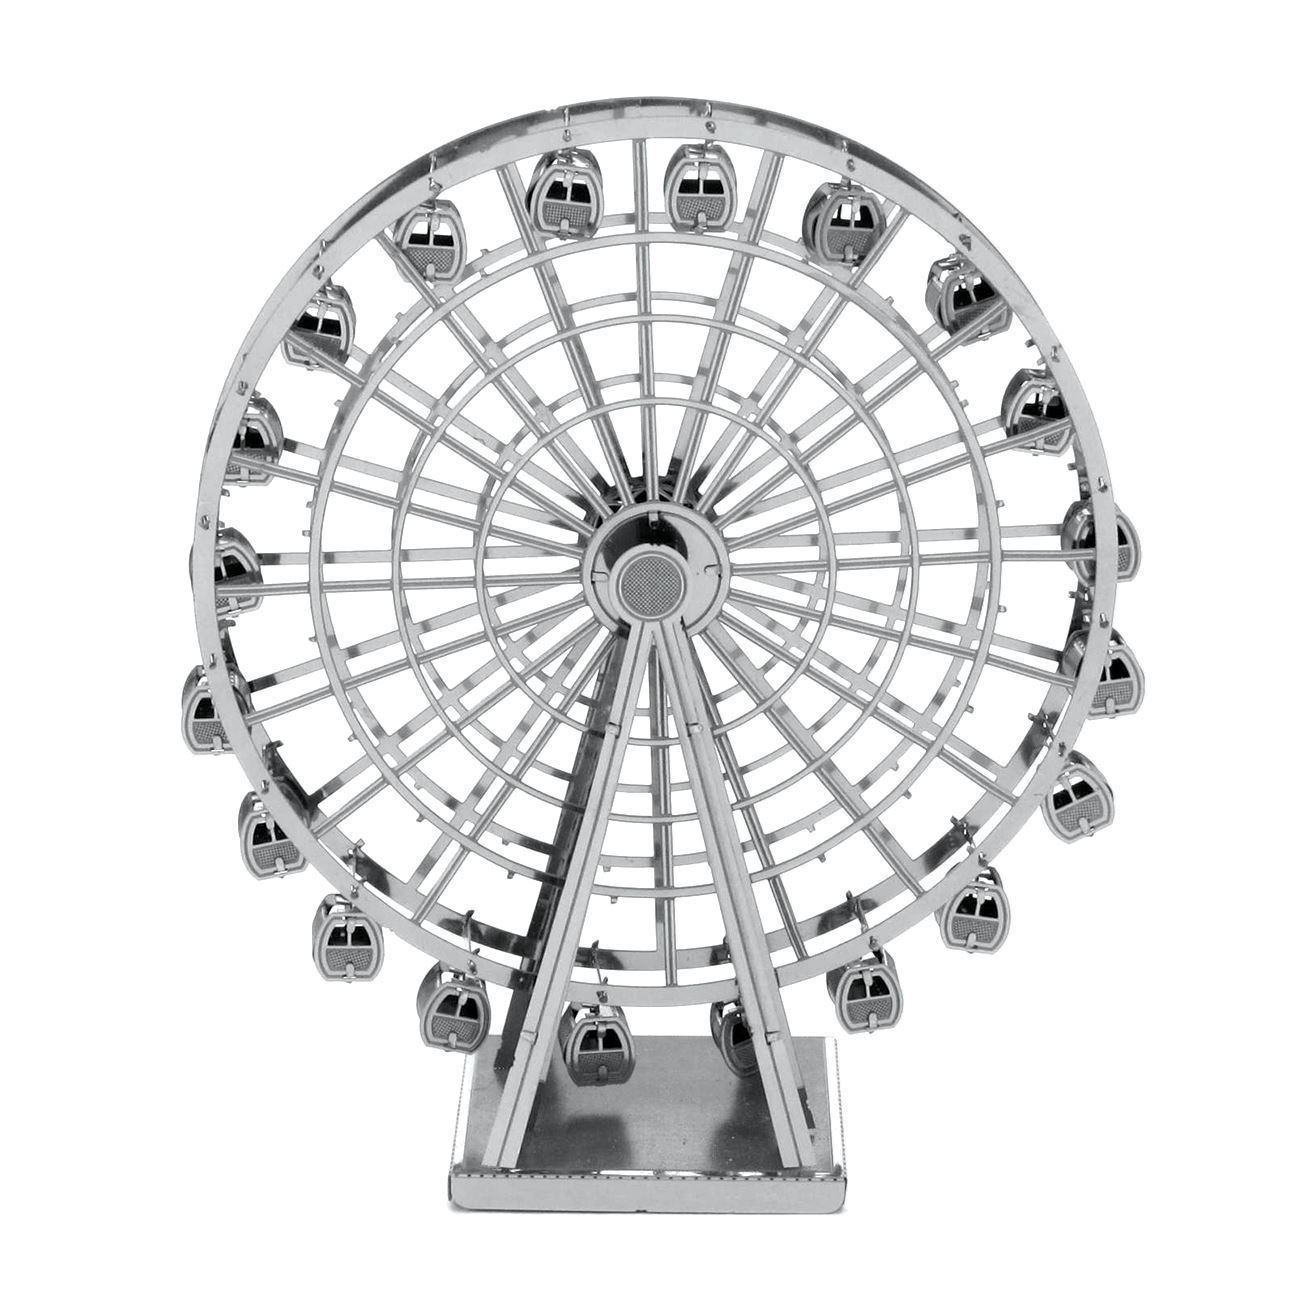 Fascinations Metal Earth Ferris Wheel 3D Miniature Landmark Structure Model 